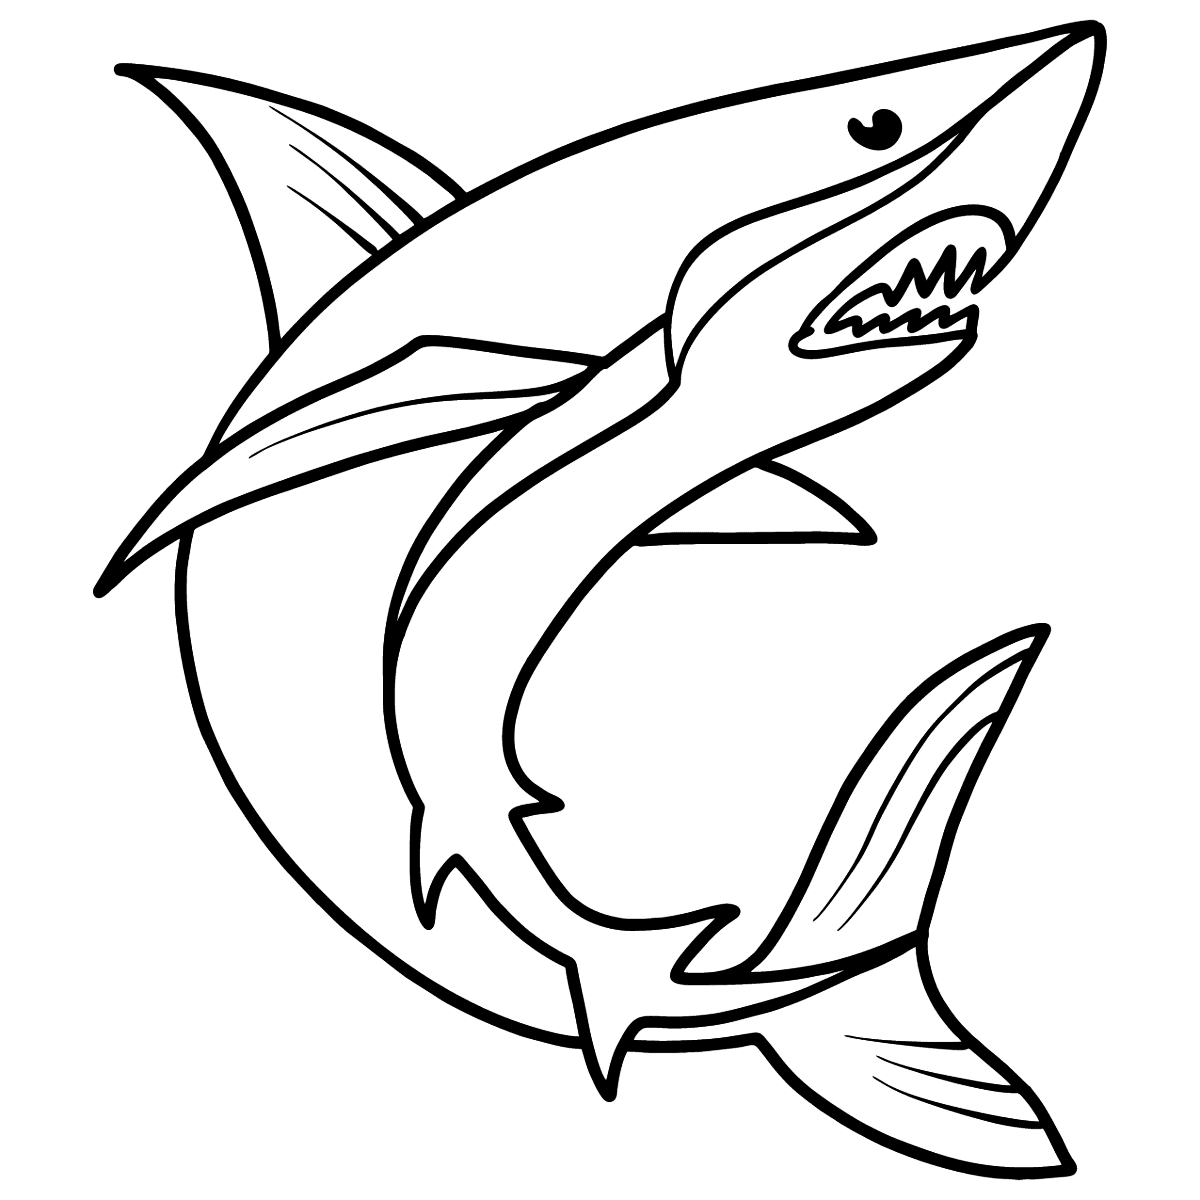 Добрая акула раскраска для детей